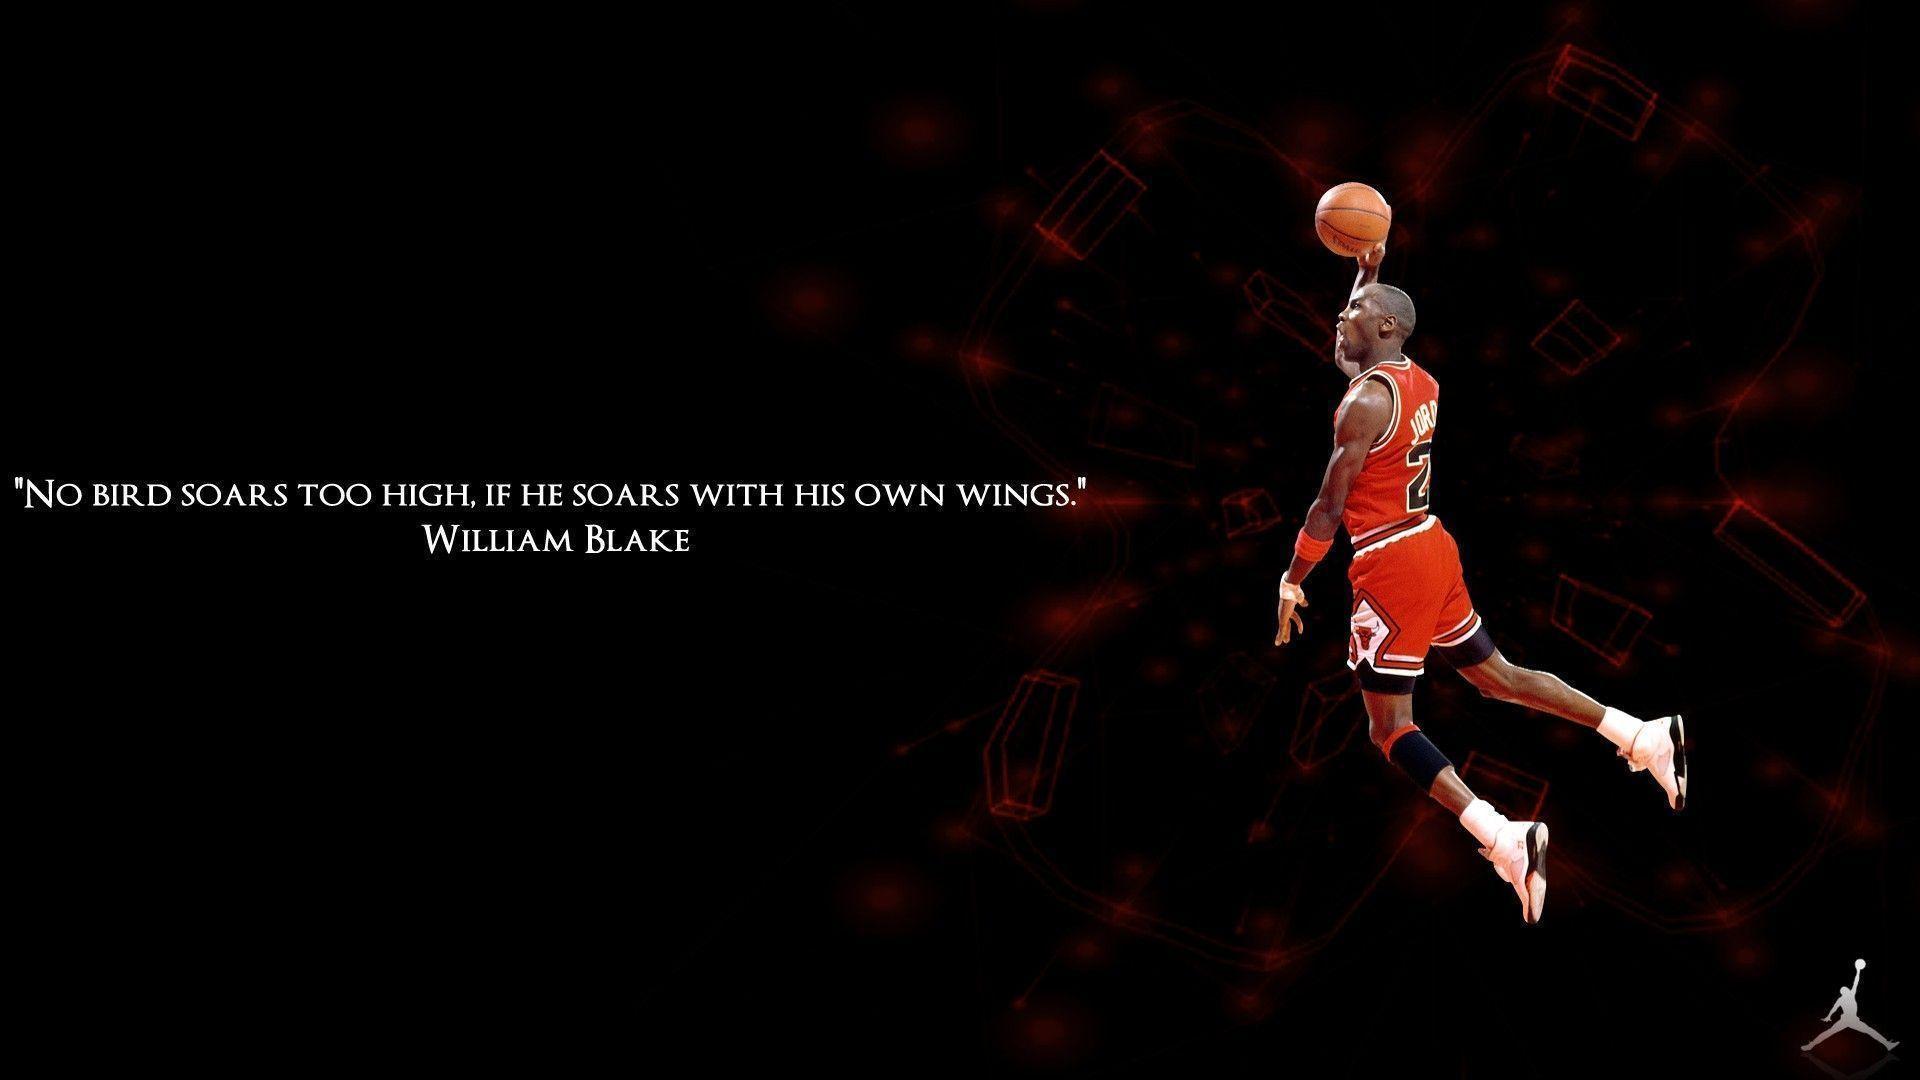 Sport: Michael Jordan Dunk 2014 HD Wallpaper, wallpapers hd for